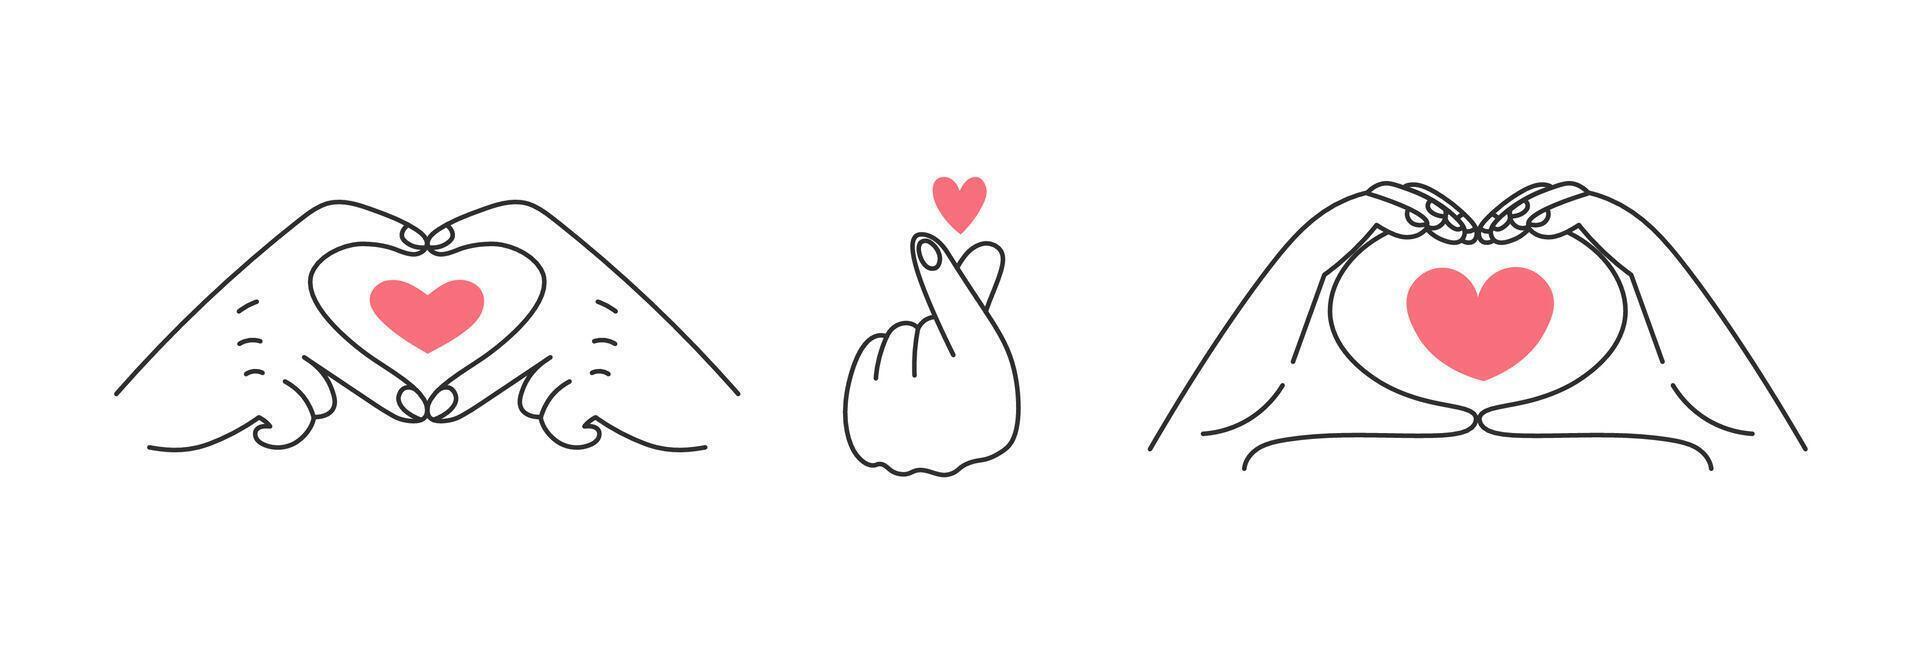 Korean finger heart gesture set vector